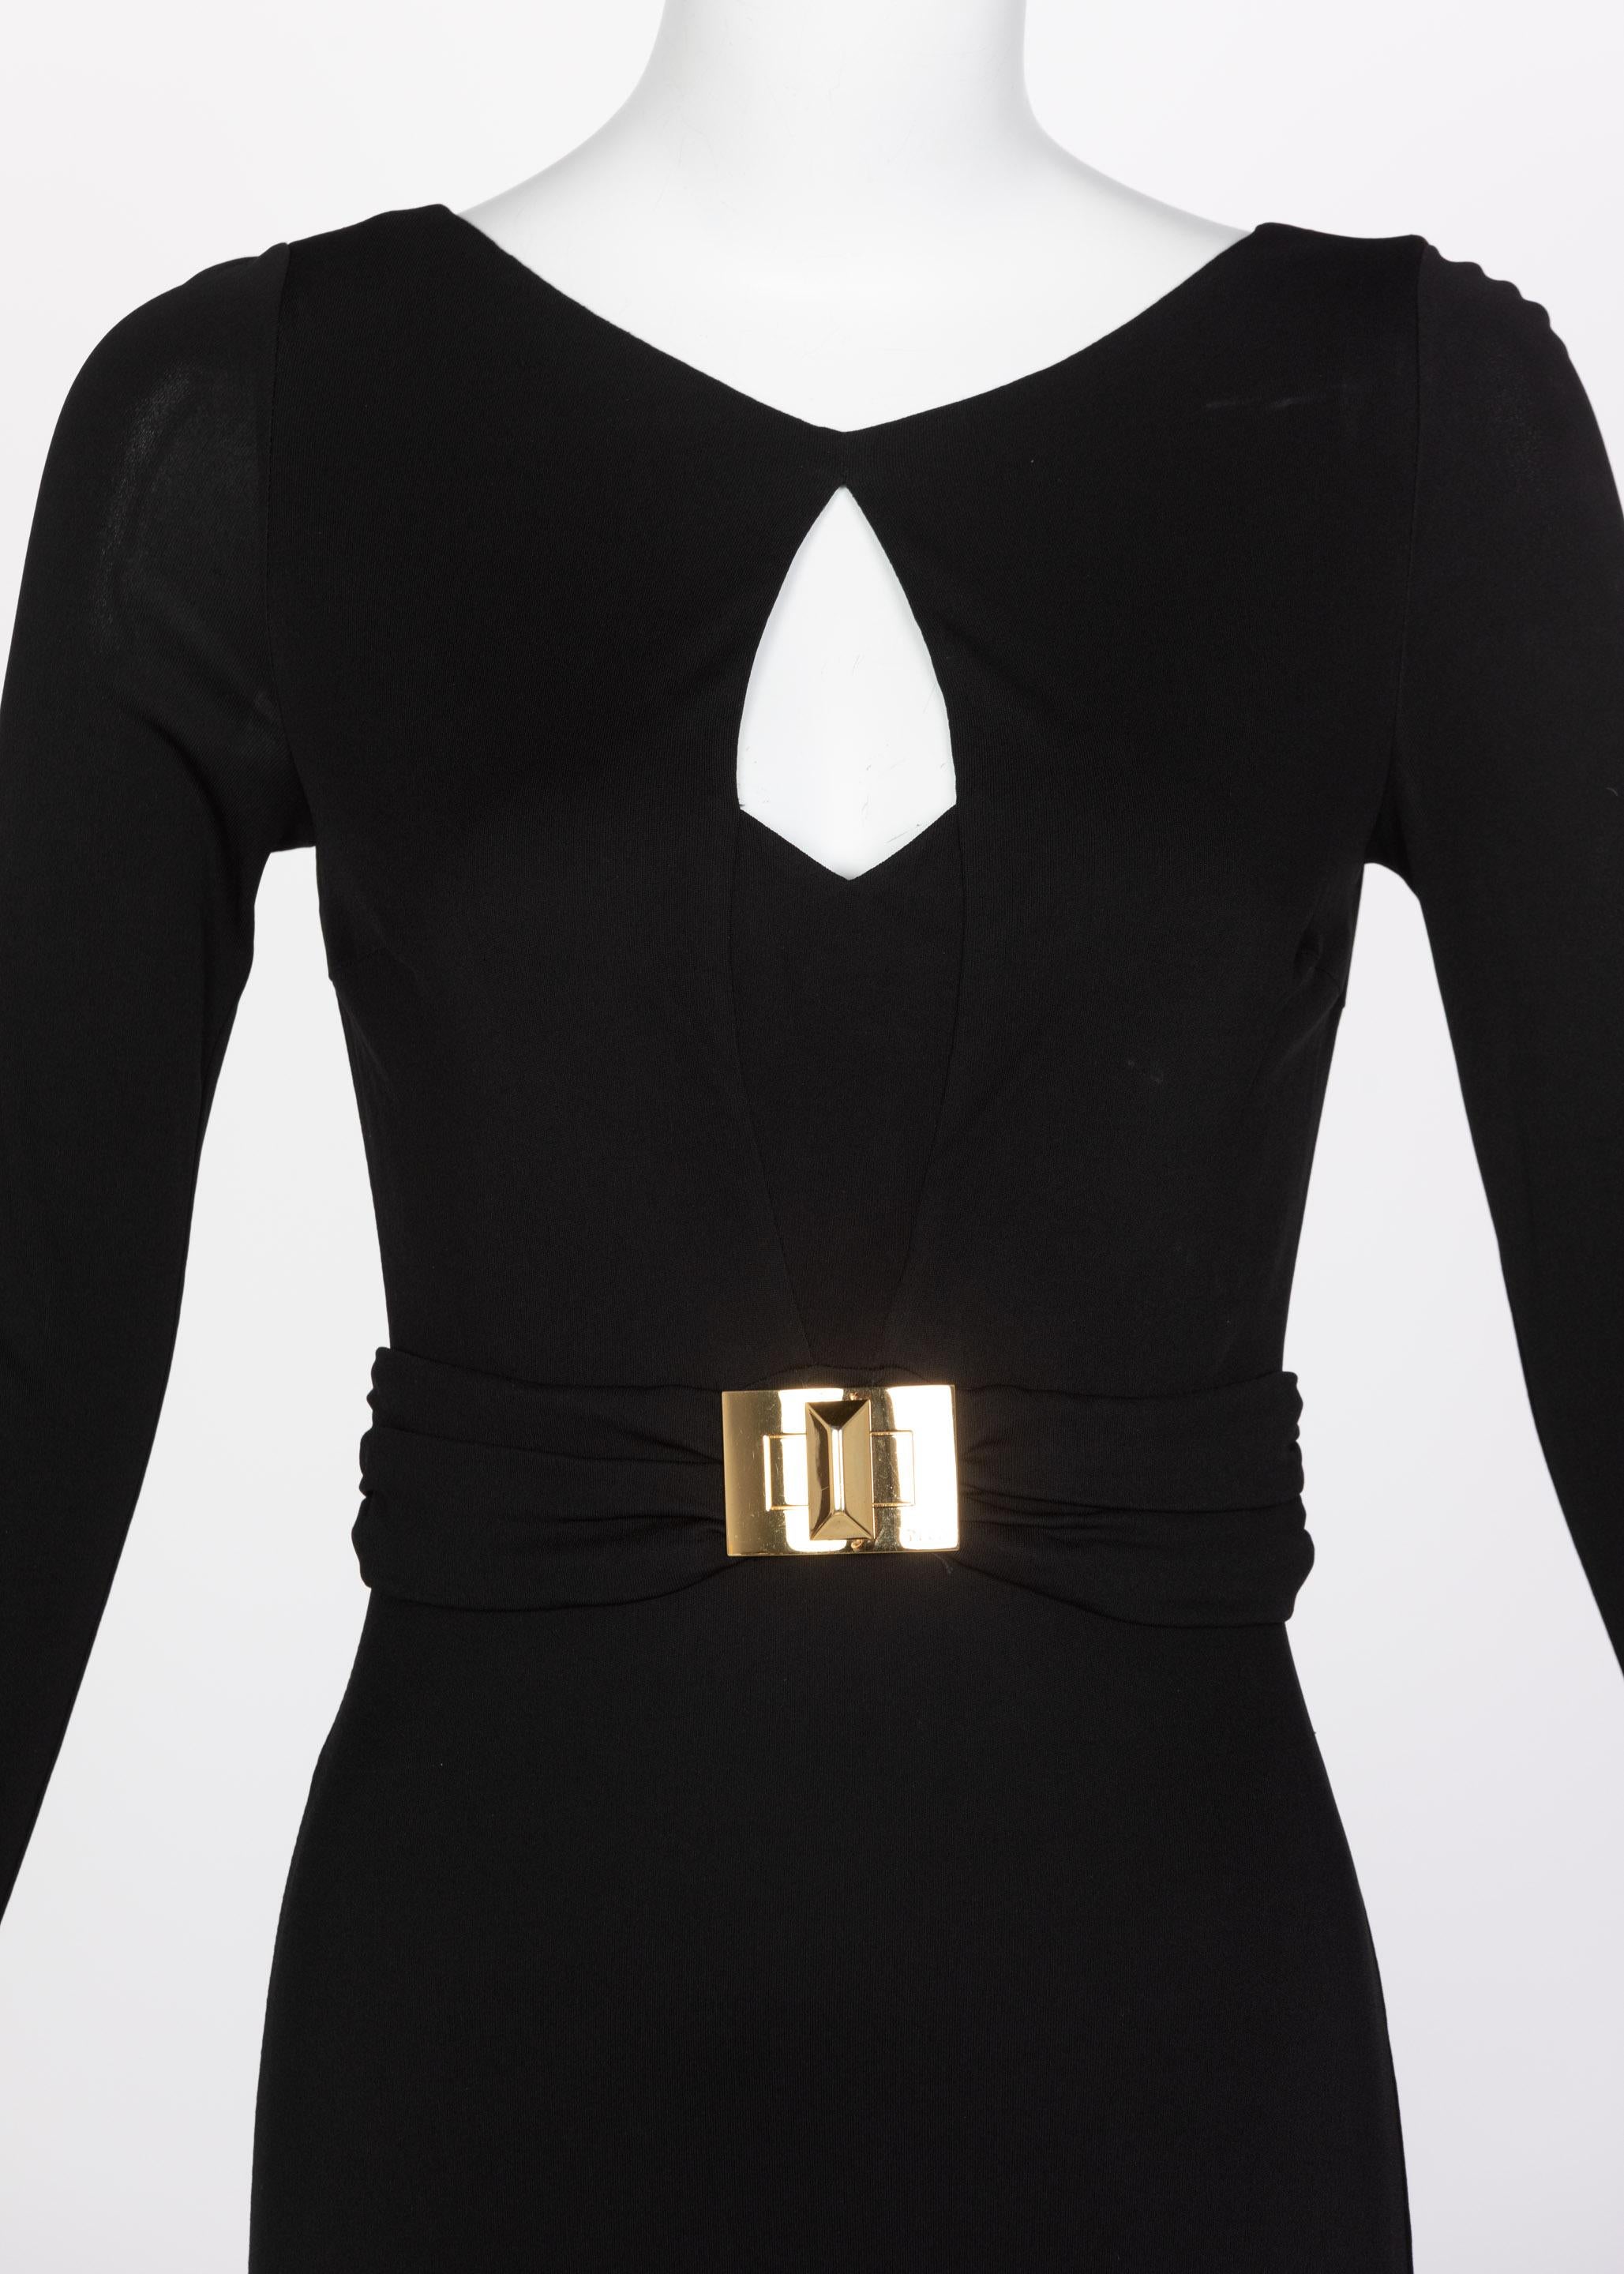 Emilio Pucci Black Liquid Jersey Cut Out Gold Maxi Dress Gown 3